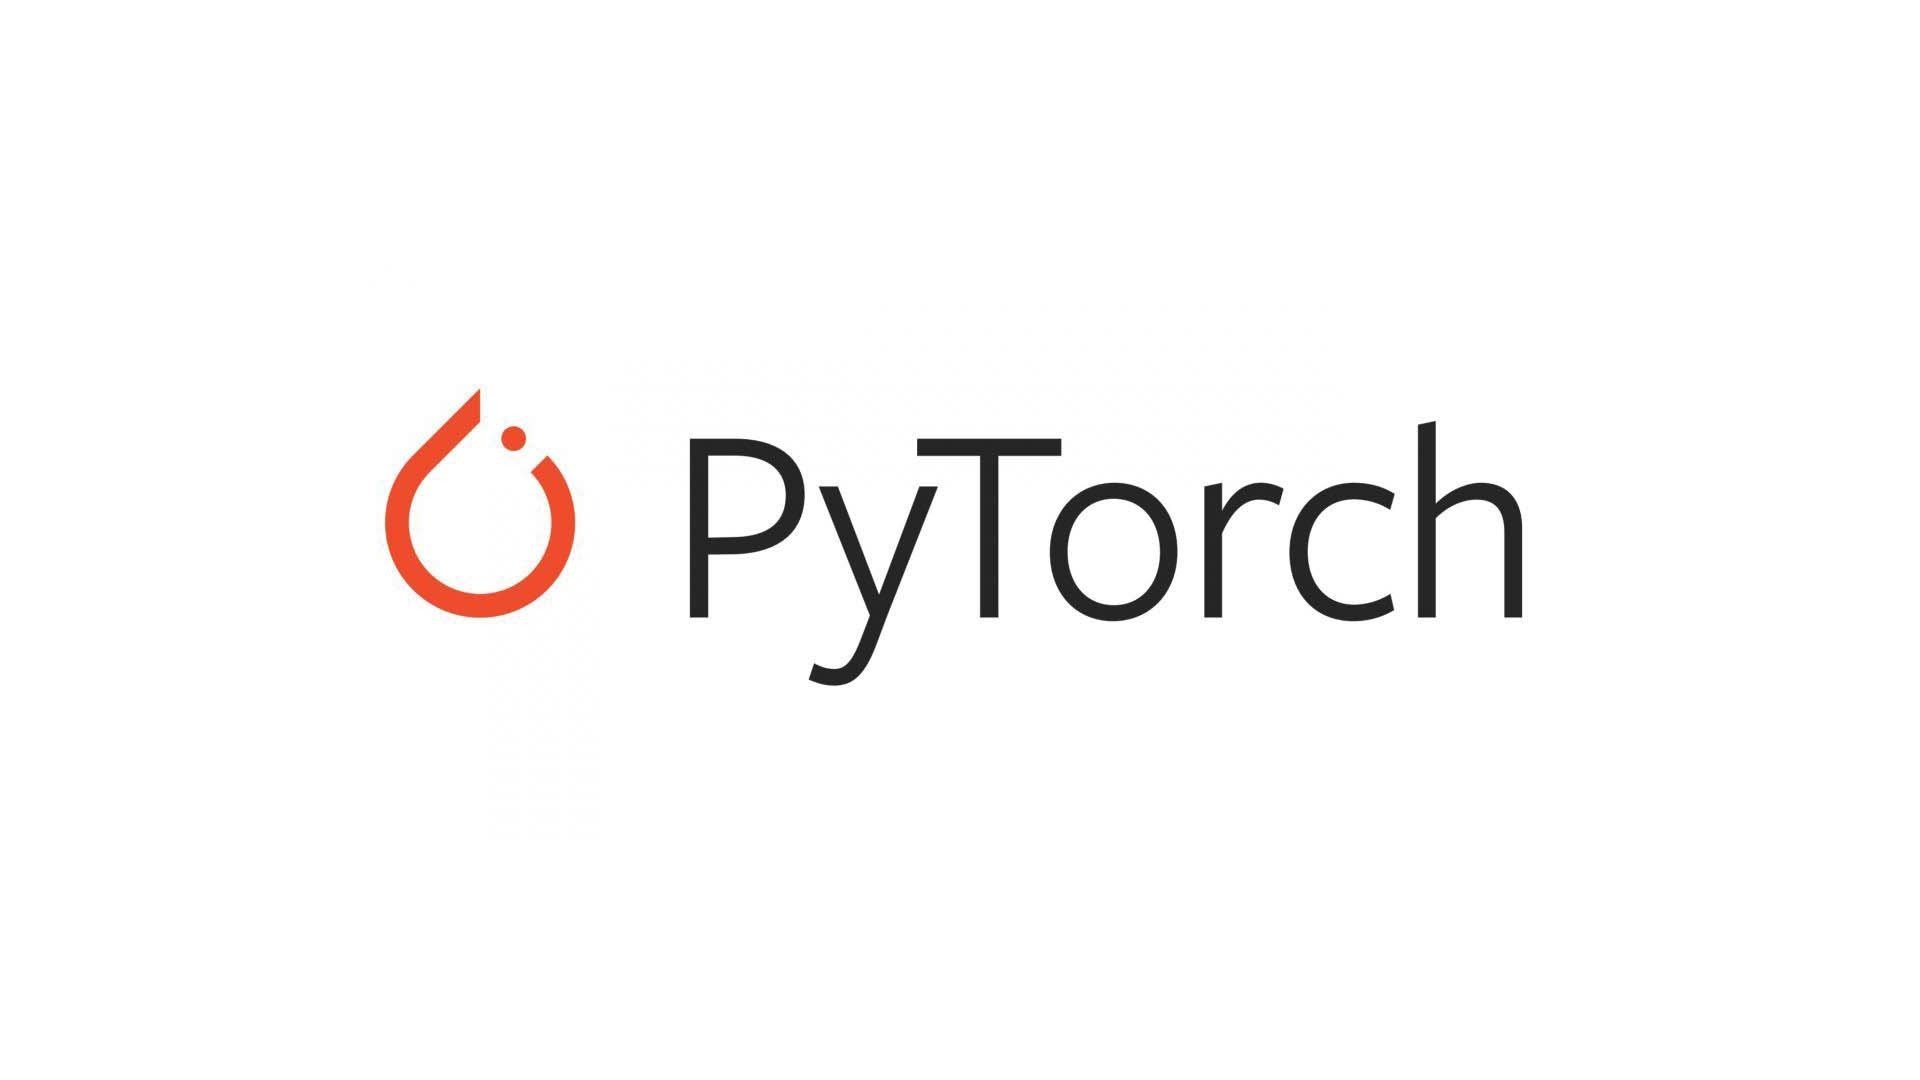 Py torch. PYTORCH. PYTORCH лого. PYTORCH Python. PYTORCH картинка.